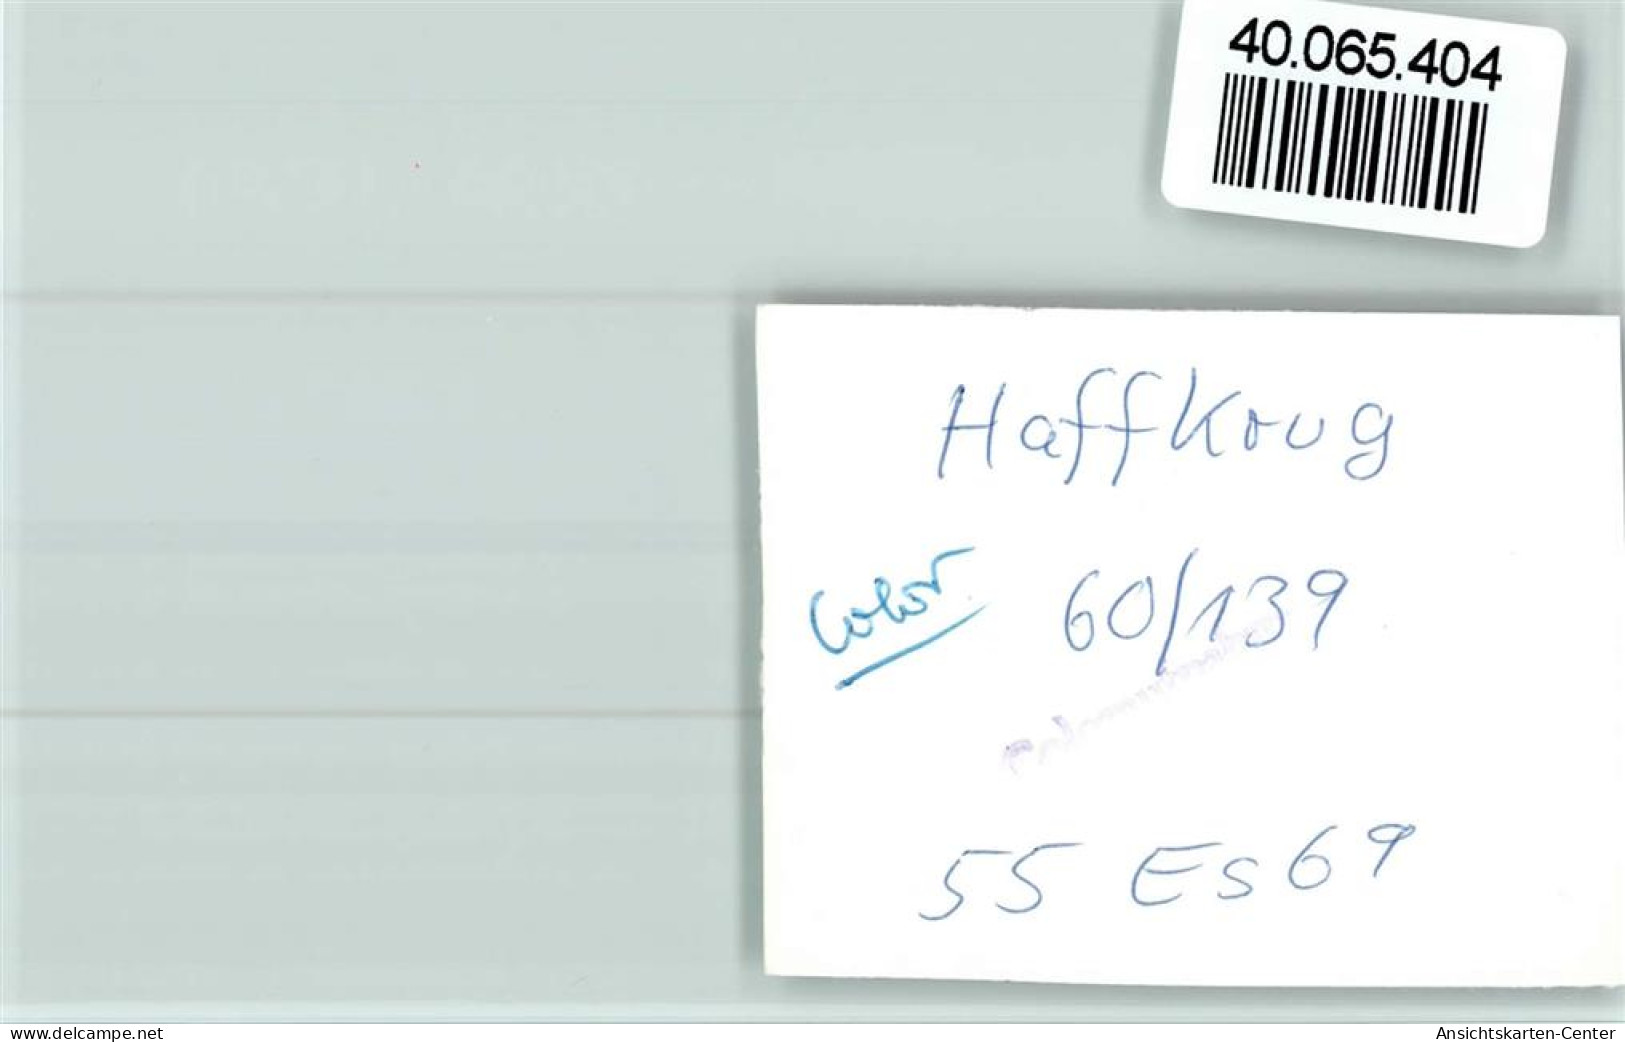 40065404 - Haffkrug - Scharbeutz